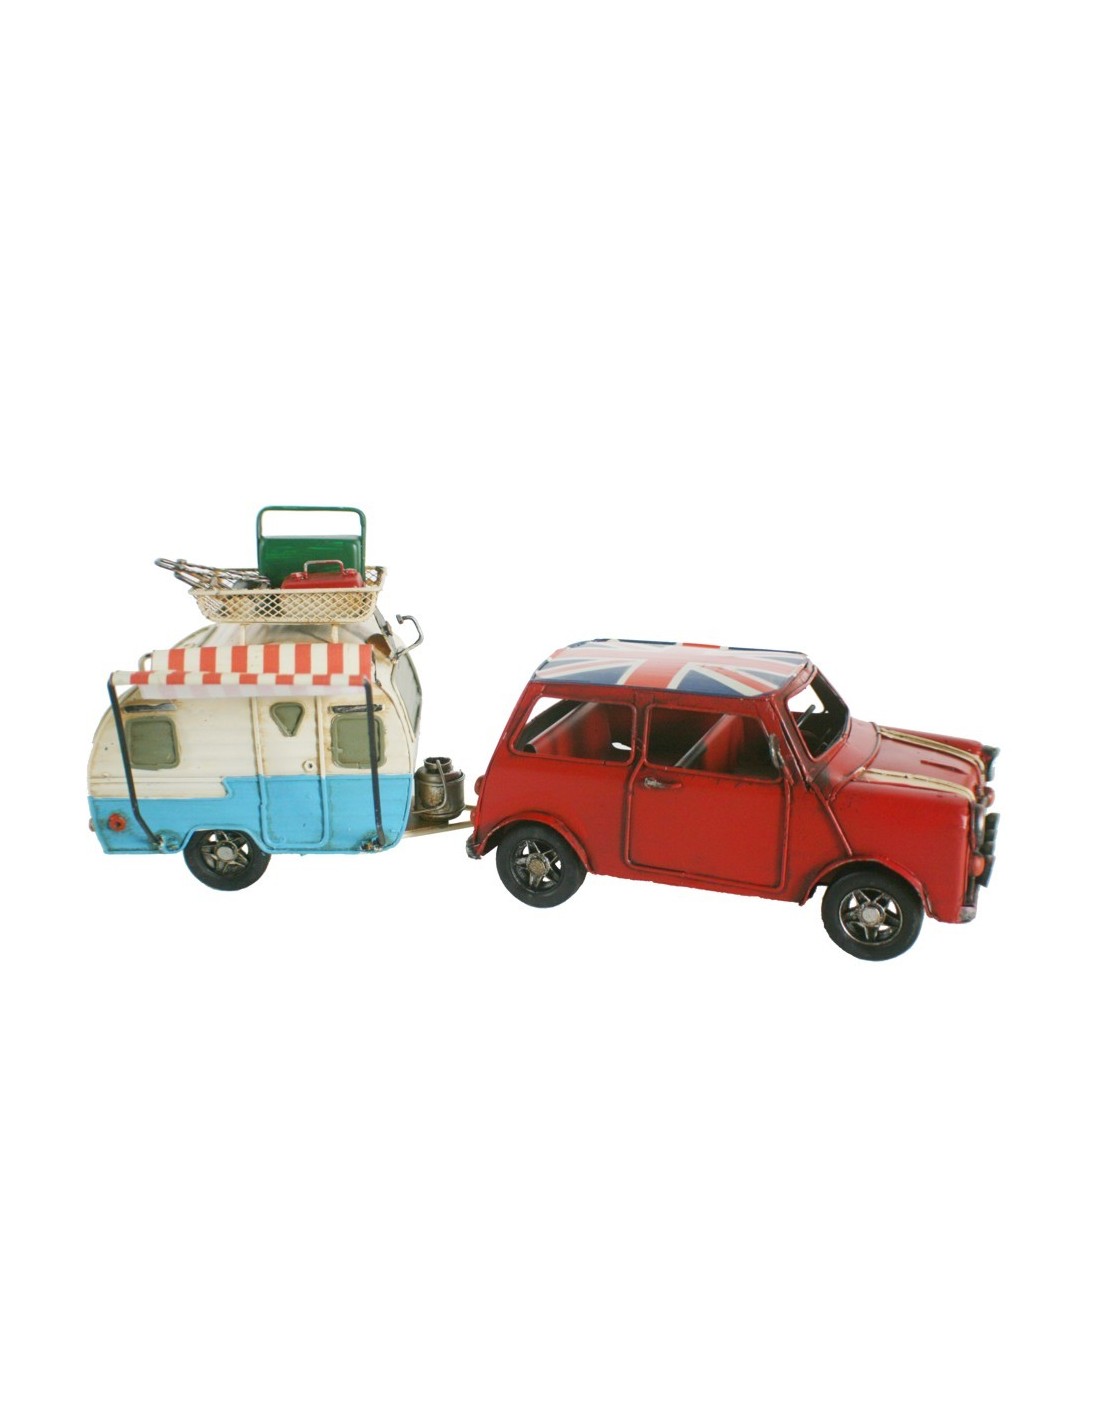 Réplica de coche mini color rojo con caravana. Medidas: 15x36x10 cm.